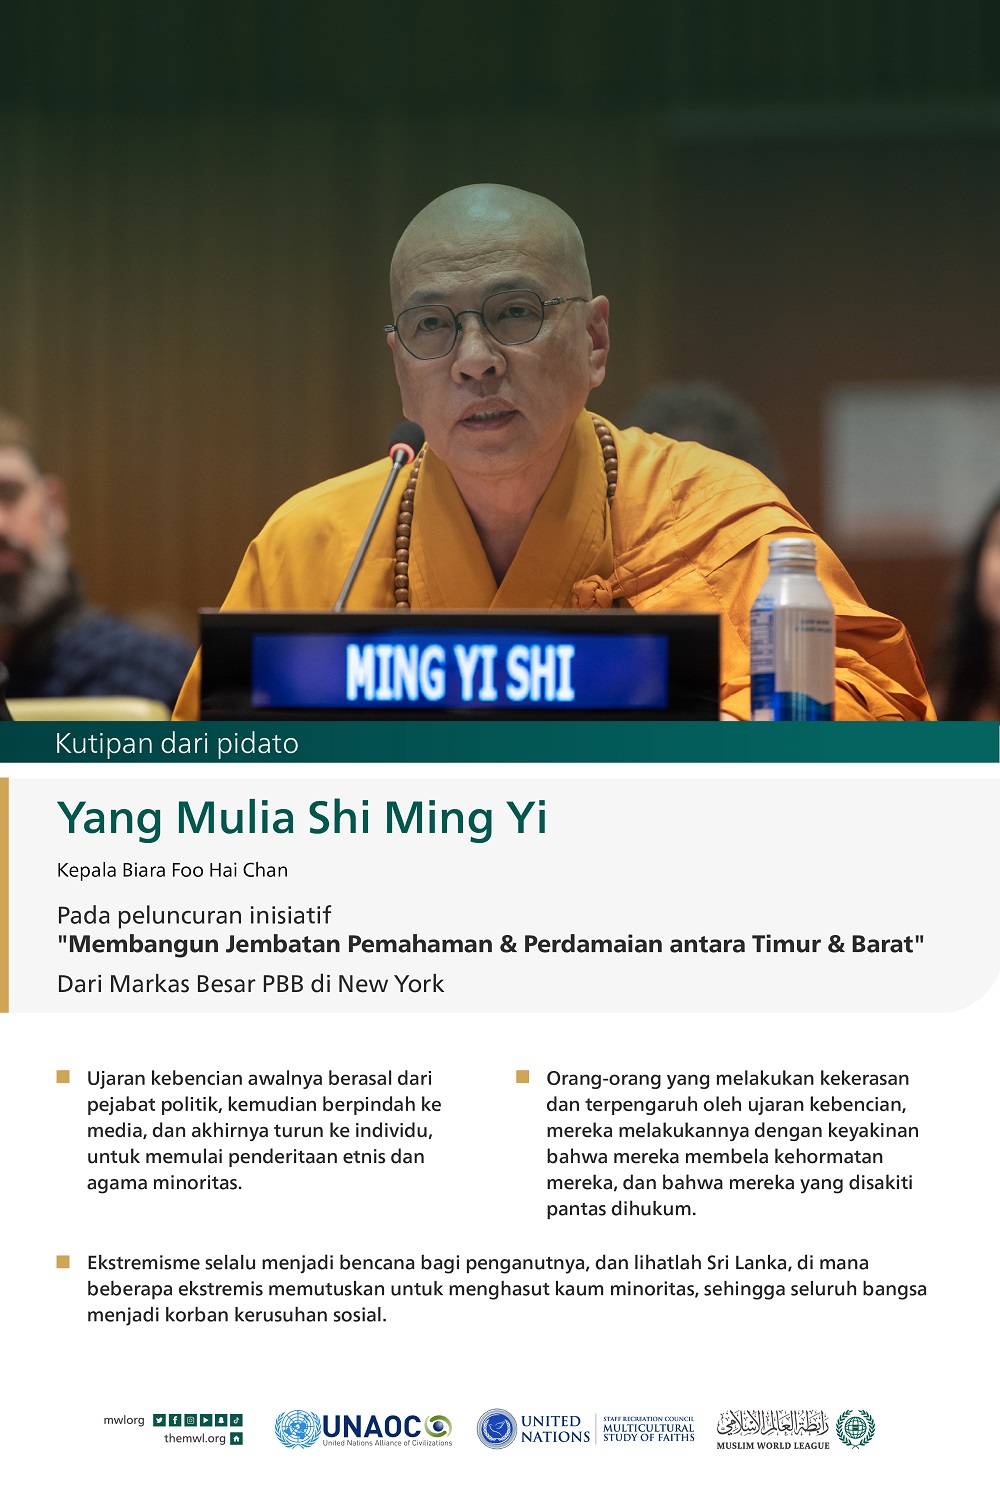 Kutipan dari pidato Yang Mulia Shi Ming Yi, Kepala Biara Foo Hai Chan, pada peluncuran inisiatif "Membangun Jembatan Pemahaman & Perdamaian antara Timur & Barat", dari Markas Besar PBB di New York: